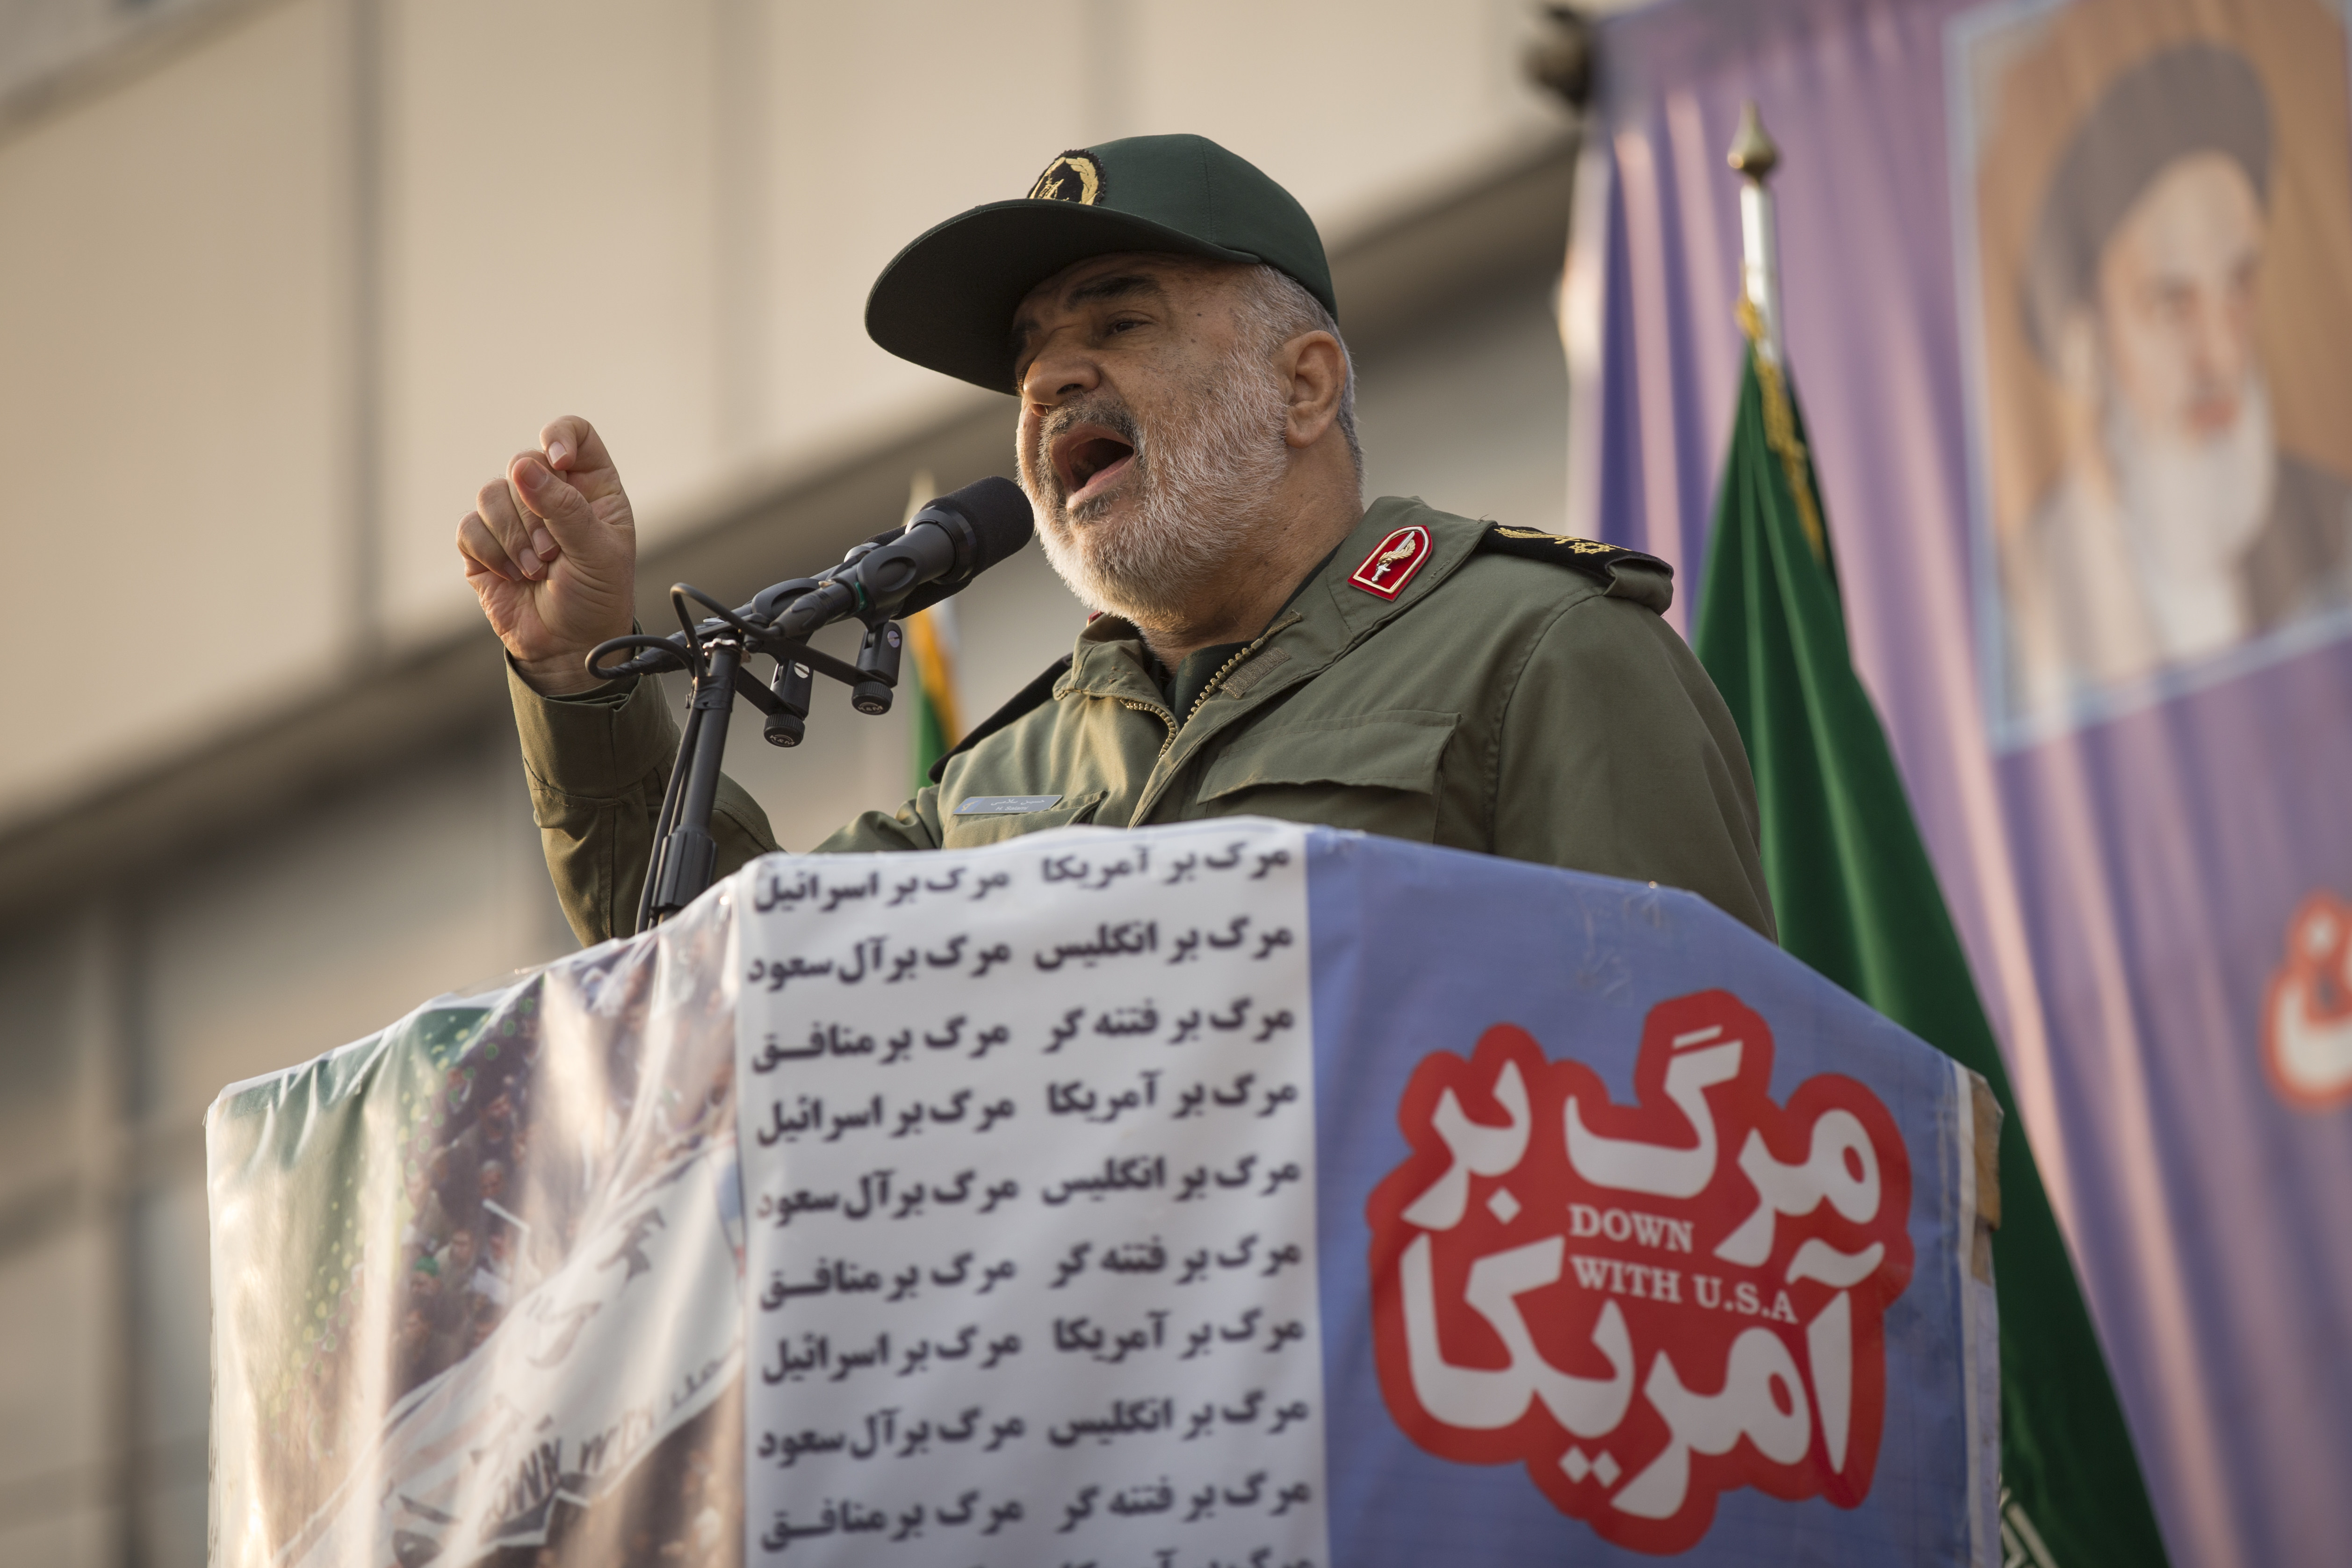 El jefe de la Guardia Revolucionaria de Irán, Hosseim Salami, amenazó a EEUU con una venganza tras la muerte de Soleimani (Rouzbeh Fouladi/ZUMA Wire/dpa)
